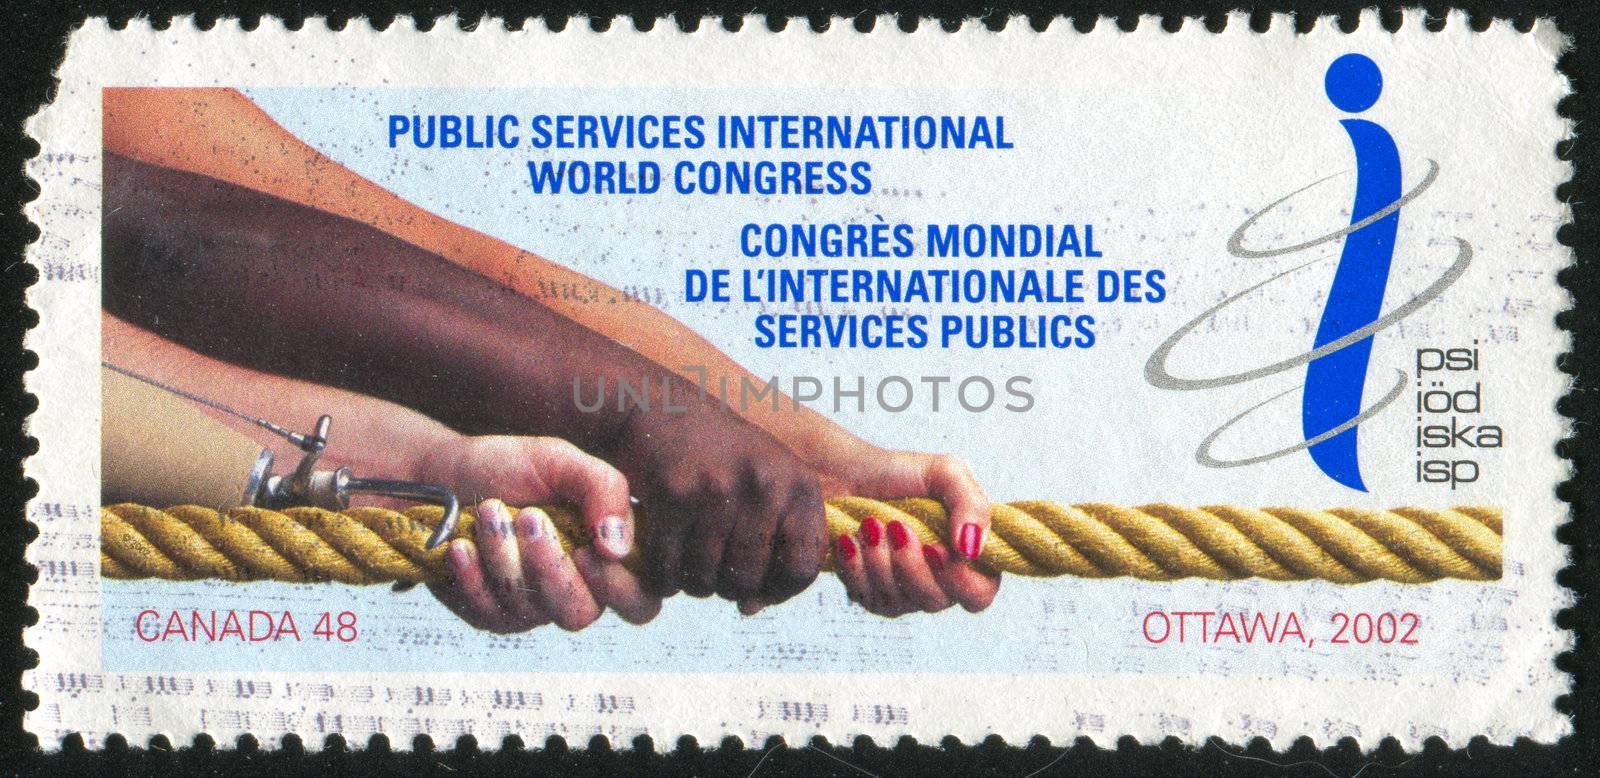 CANADA - CIRCA 2002: stamp printed by Canada, shows Public Services International World Congress, Ottawa, circa 2002